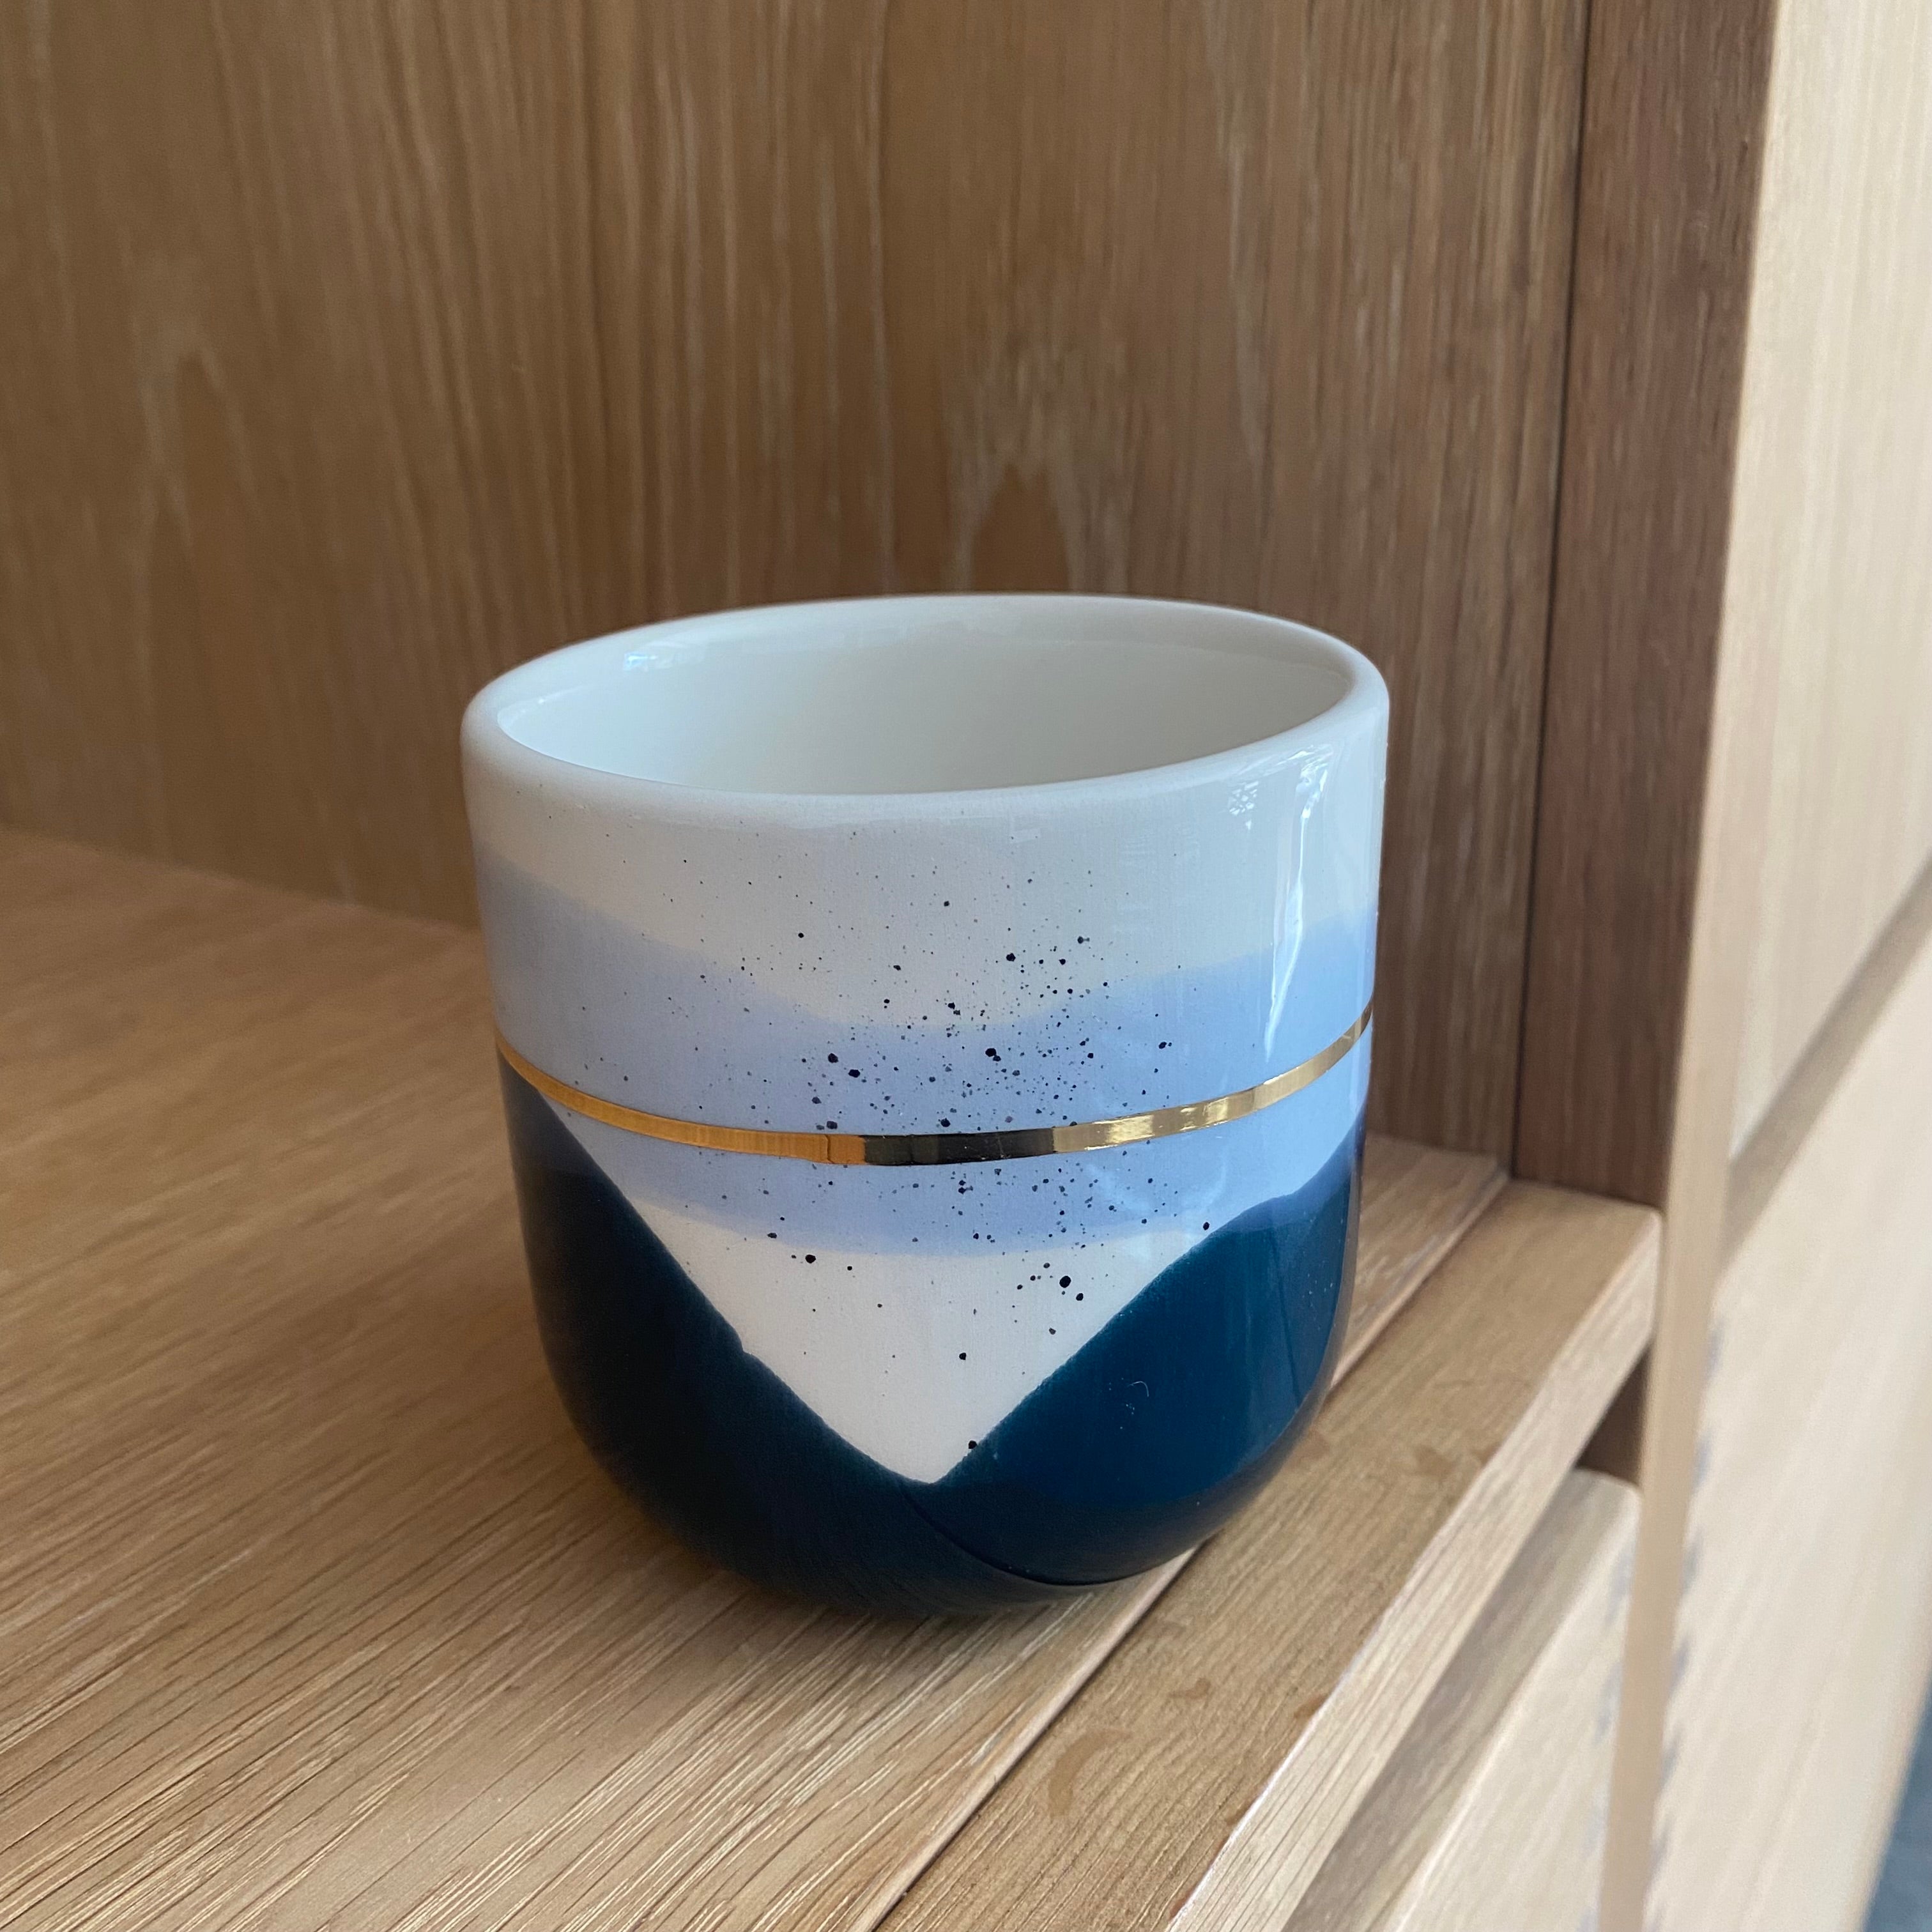 Marinski Heartmades latte kop Landscape - dark blue, light celestial blue